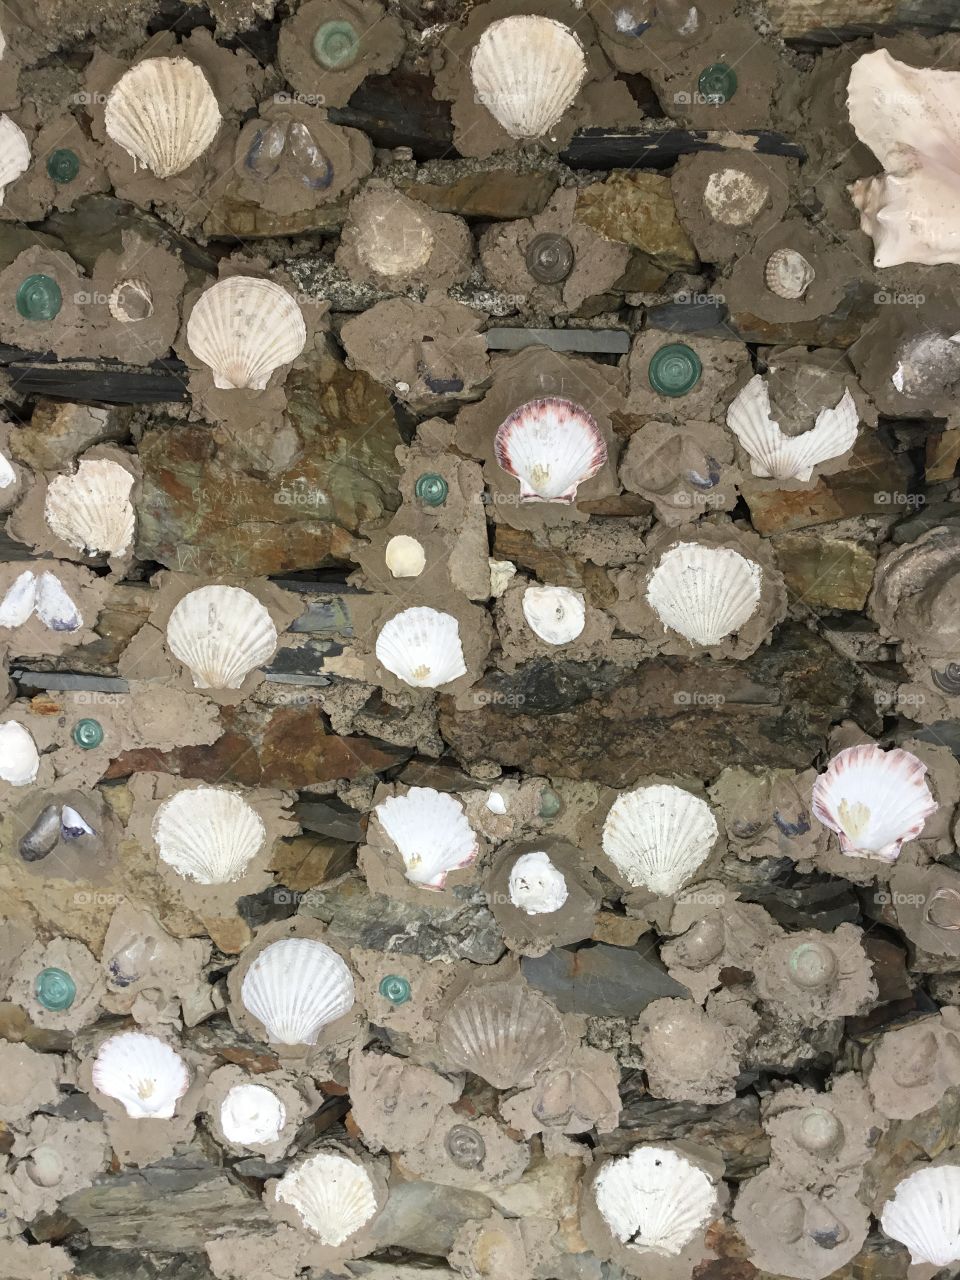 Shell grotto pattern